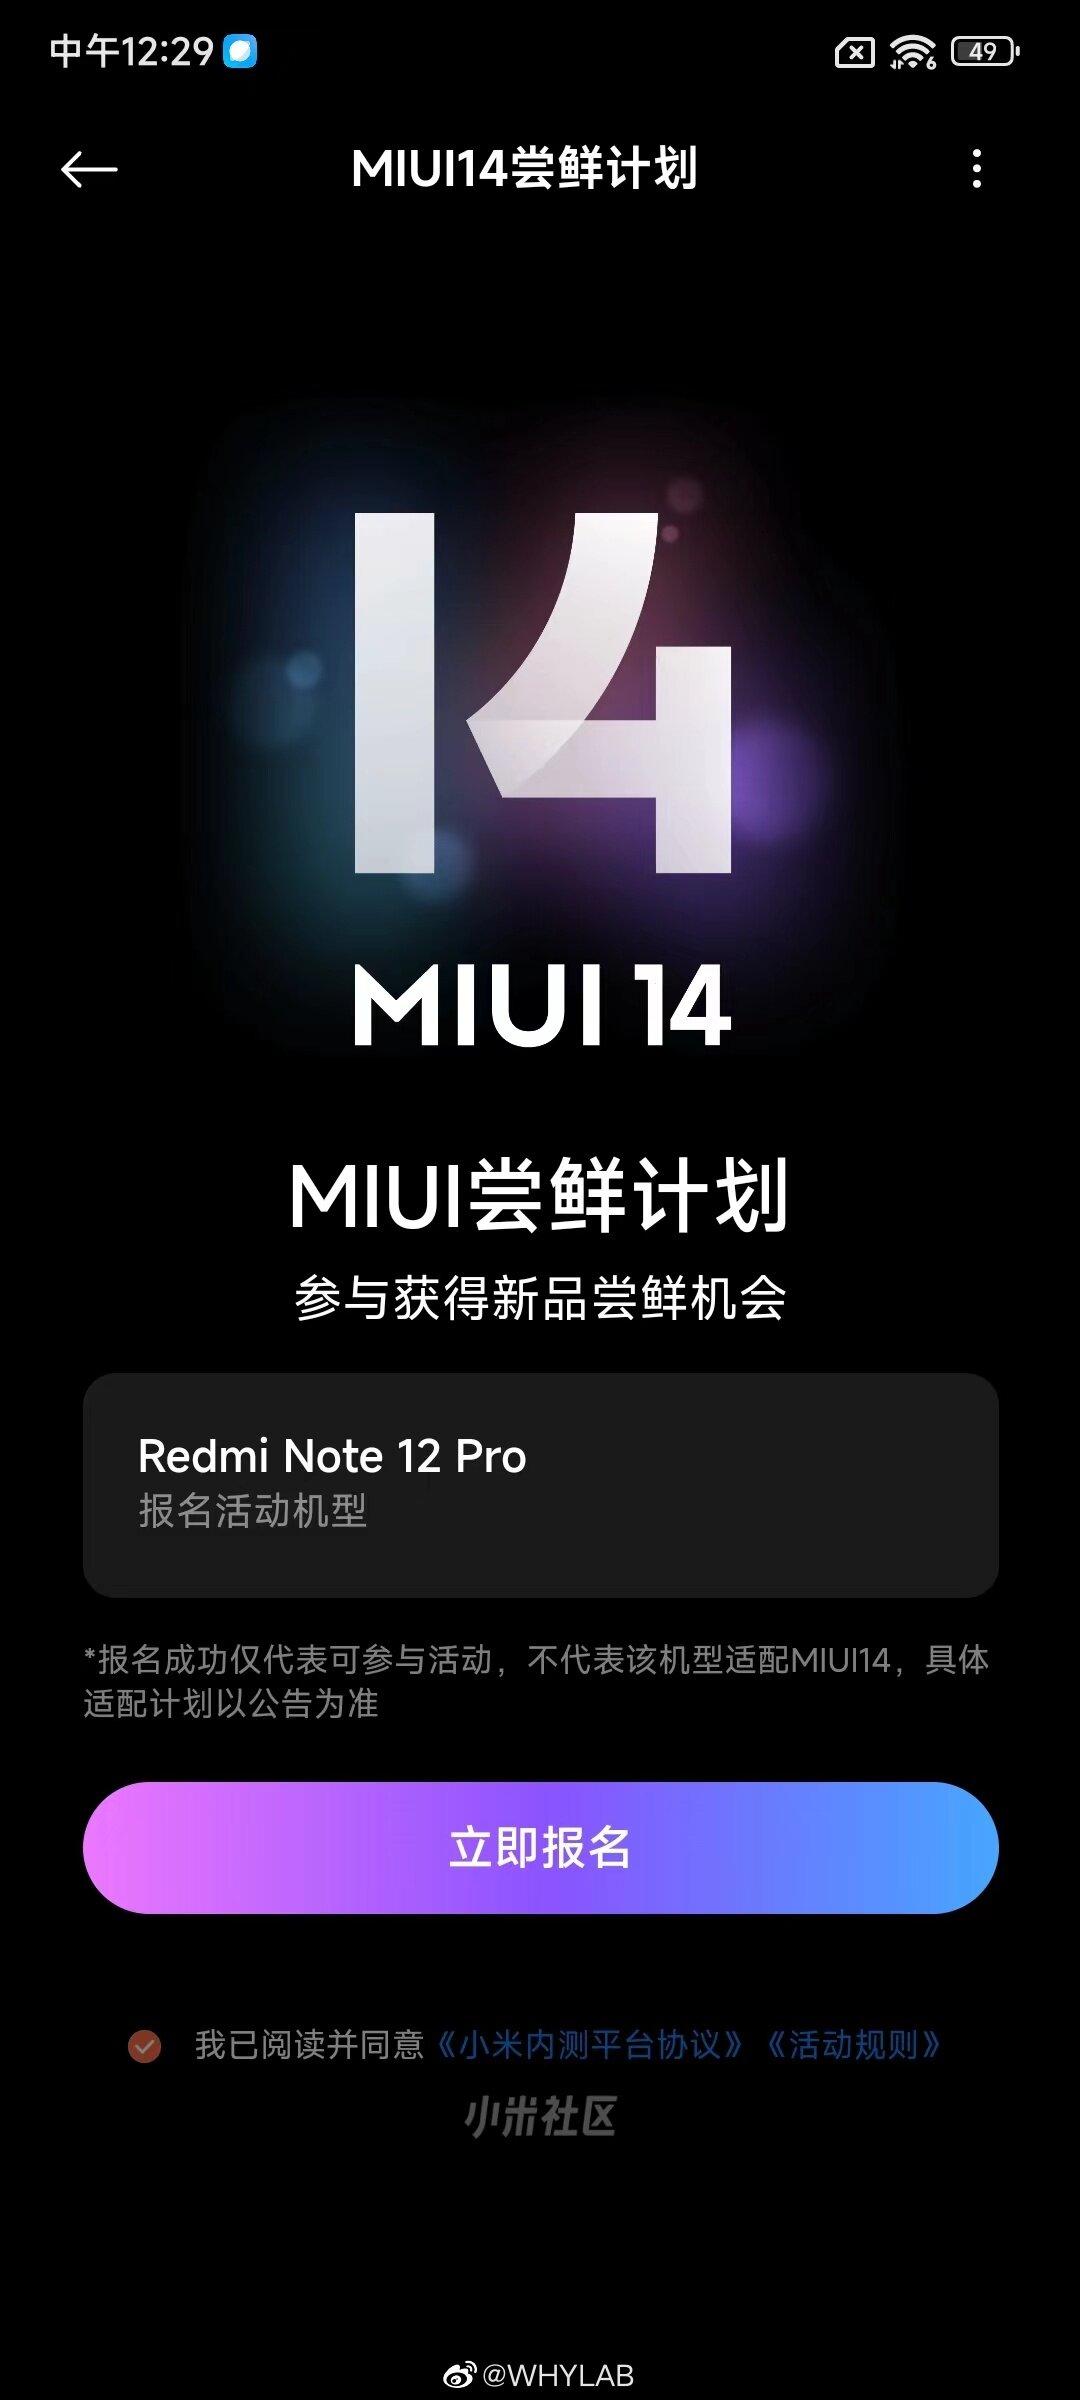 Miui 14 память. MIUI 14. Редми MIUI 14. MIUI 14 экран блокировки. Xiaomi 13 приложение.